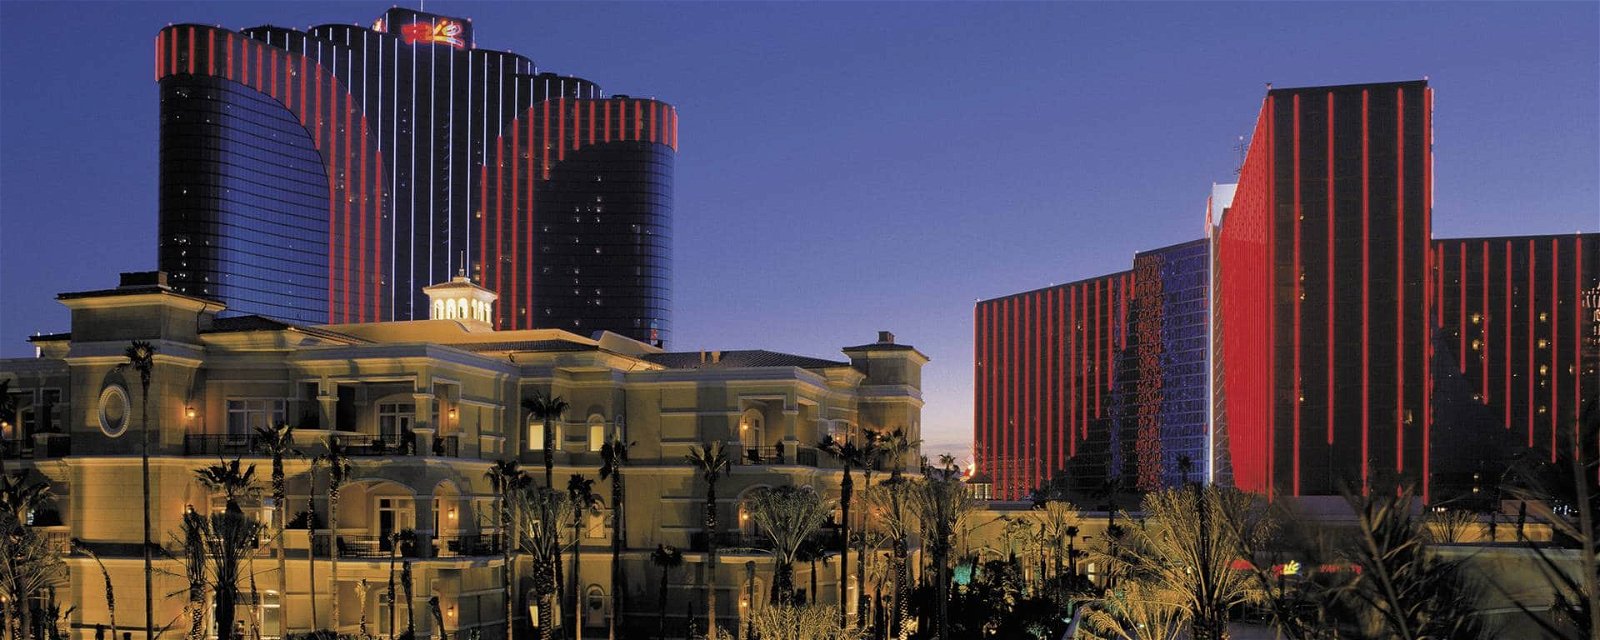 Rio All-Suite Hotel Las Vegas Deals & Promo Codes